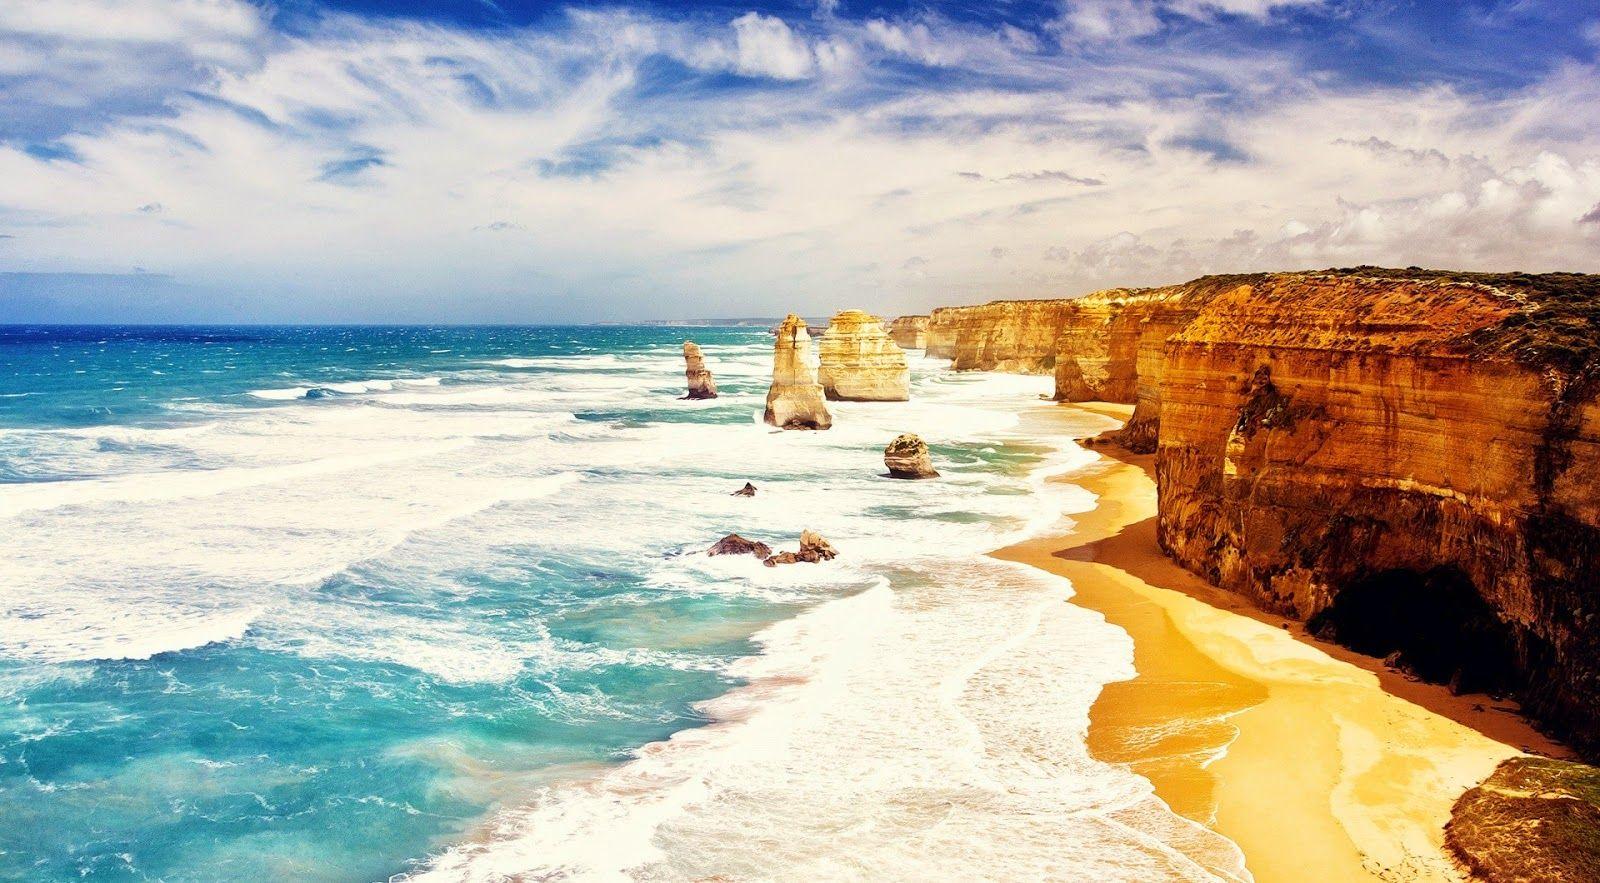 The Twelve Apostles, The Great Ocean Road, Australia. The Sea